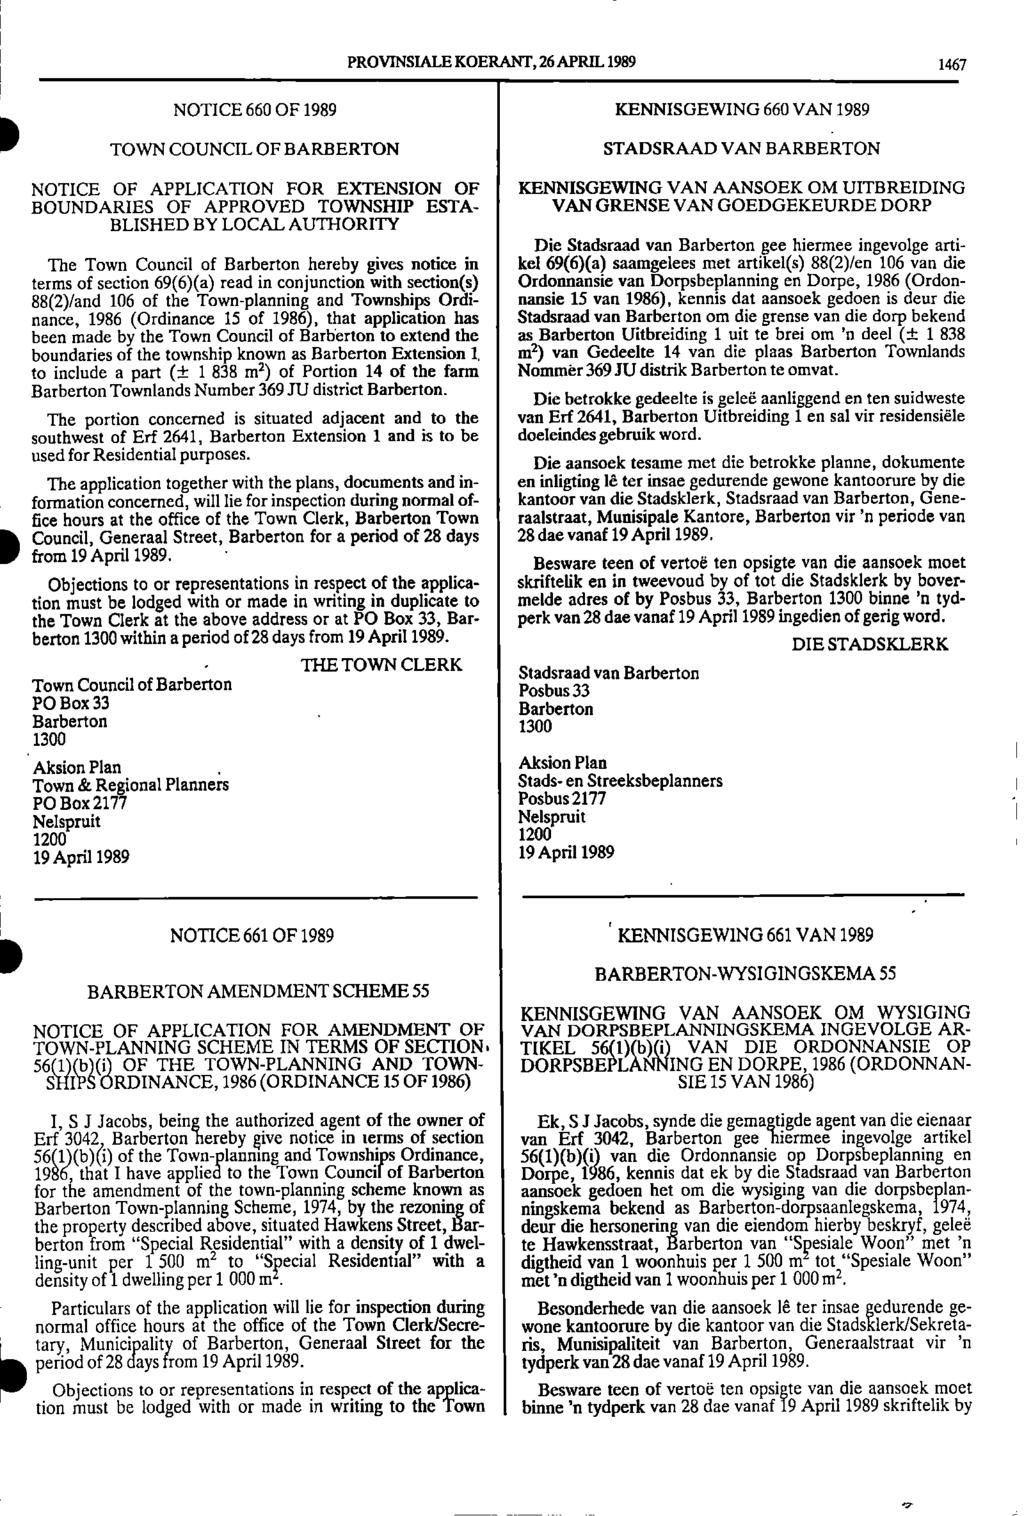 1 I NOTICE I PROVINMALE KOERANT, 26 APRIL 1989 1467 NOTICE 660 OF 1989 KENNISGEWING 660 VAN 1989 0 TOWN COUNCIL OF BARBERTON STADSRAAD VAN BARBERTON NOTICE OF APPLICATION FOR EXTENSION OF